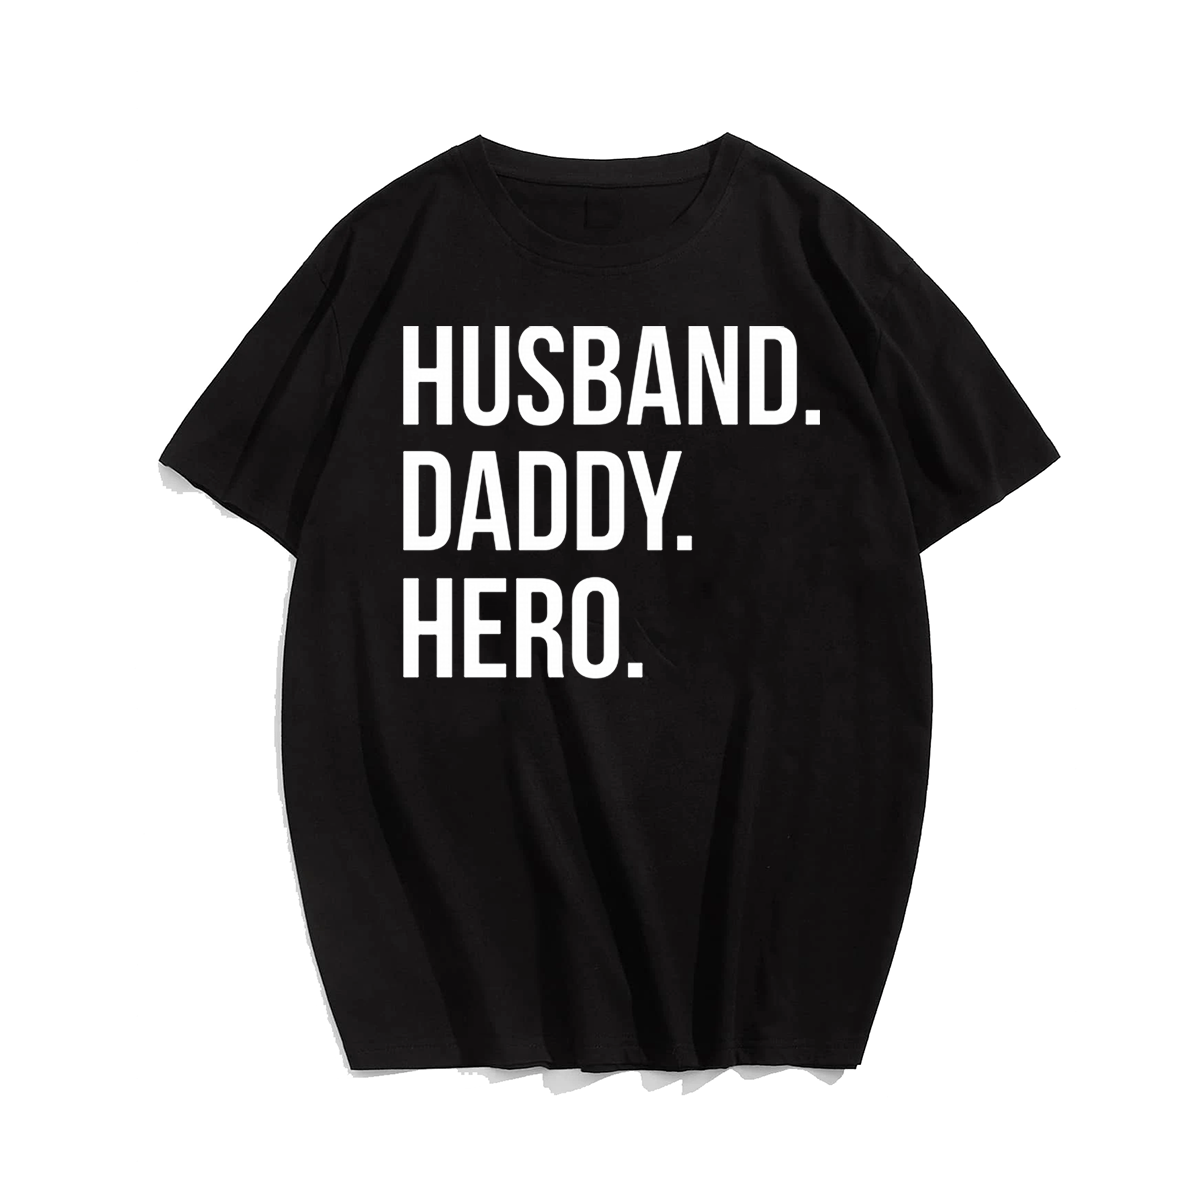 Husband Daddy Hero T-shirt for Men, Oversize Plus Size Big & Tall Man Clothing